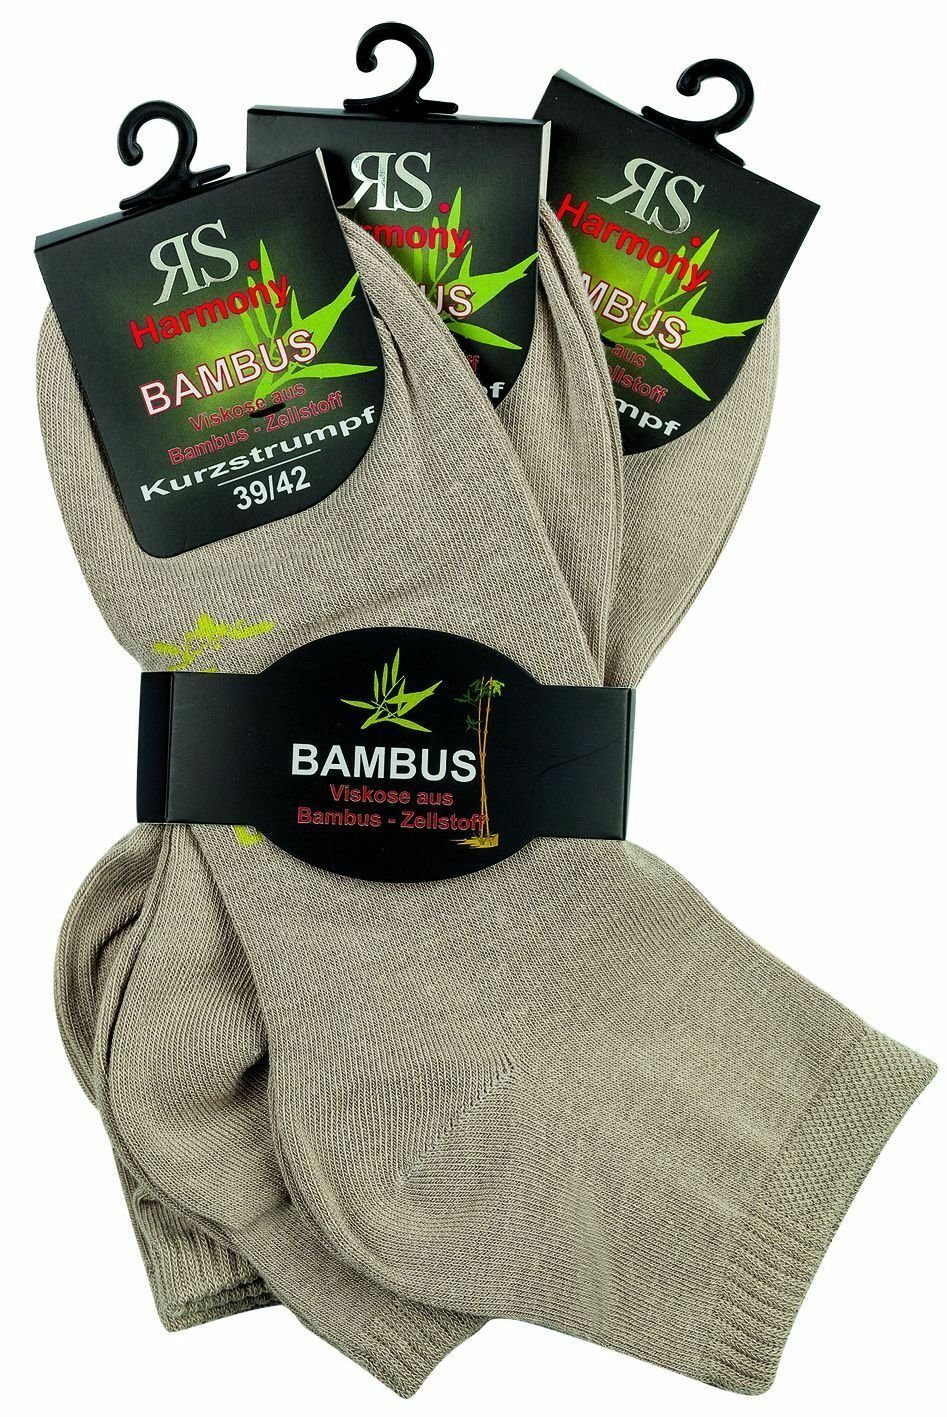 Riese Strümpfe RS Harmony Socken | Kurzsocken